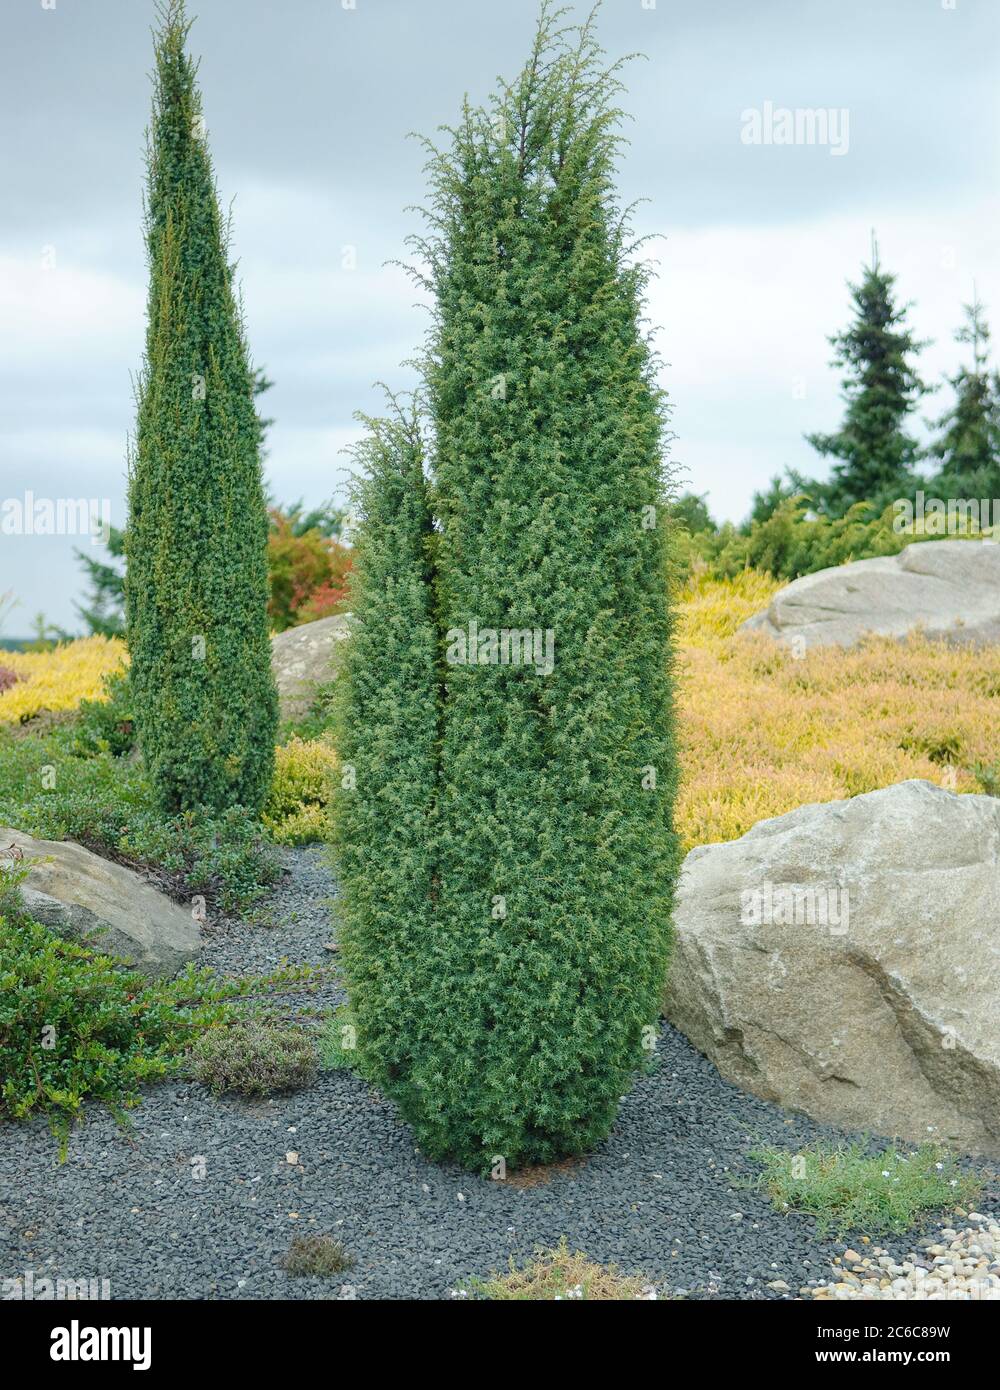 Saeulen-Wacholder, Juniperus communis Hibernica, Column juniper, Juniperus communis Hibernica Stock Photo